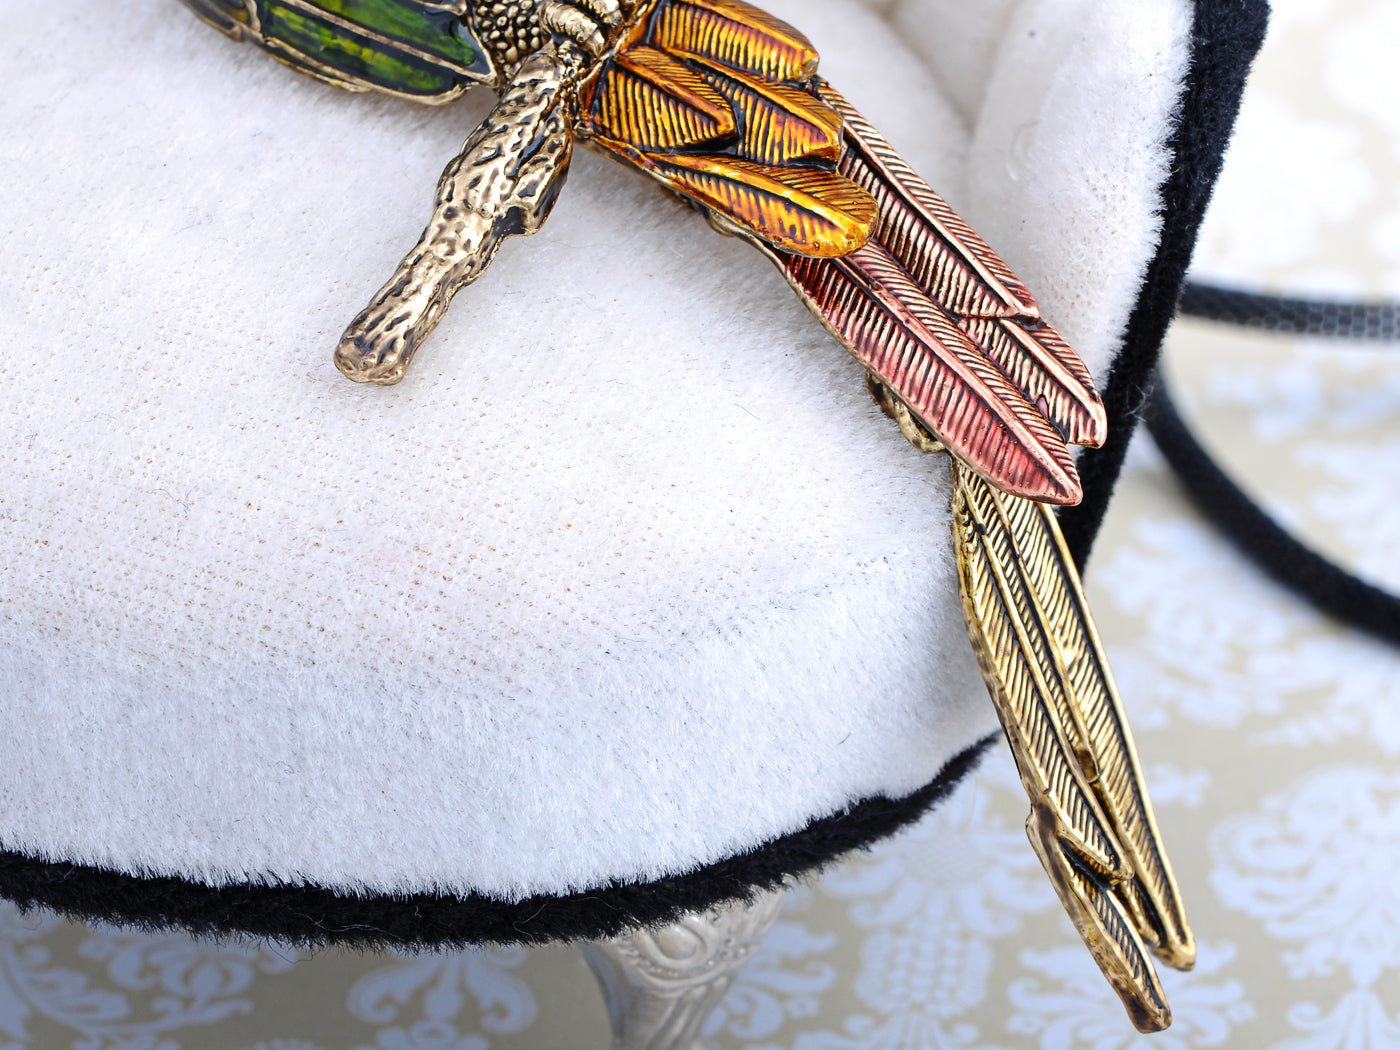 Antique Multicolored Tropical Parrot Bird Pendant Rope Necklace